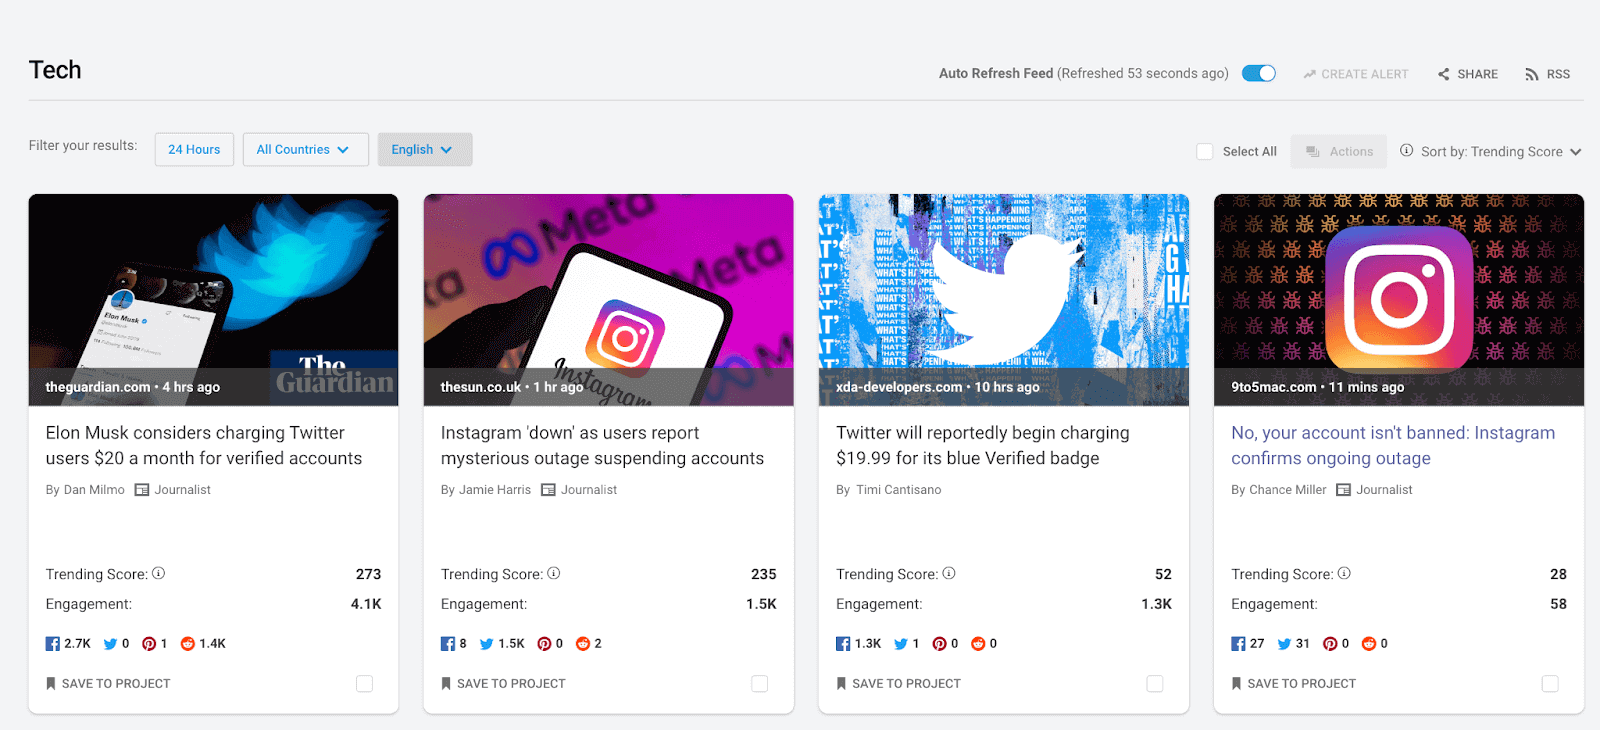 BuzzSumo Trending Digest screenshot showcasing trending Tech stories, including Elon Musk charging verified Twitter users and the Instagram blackout